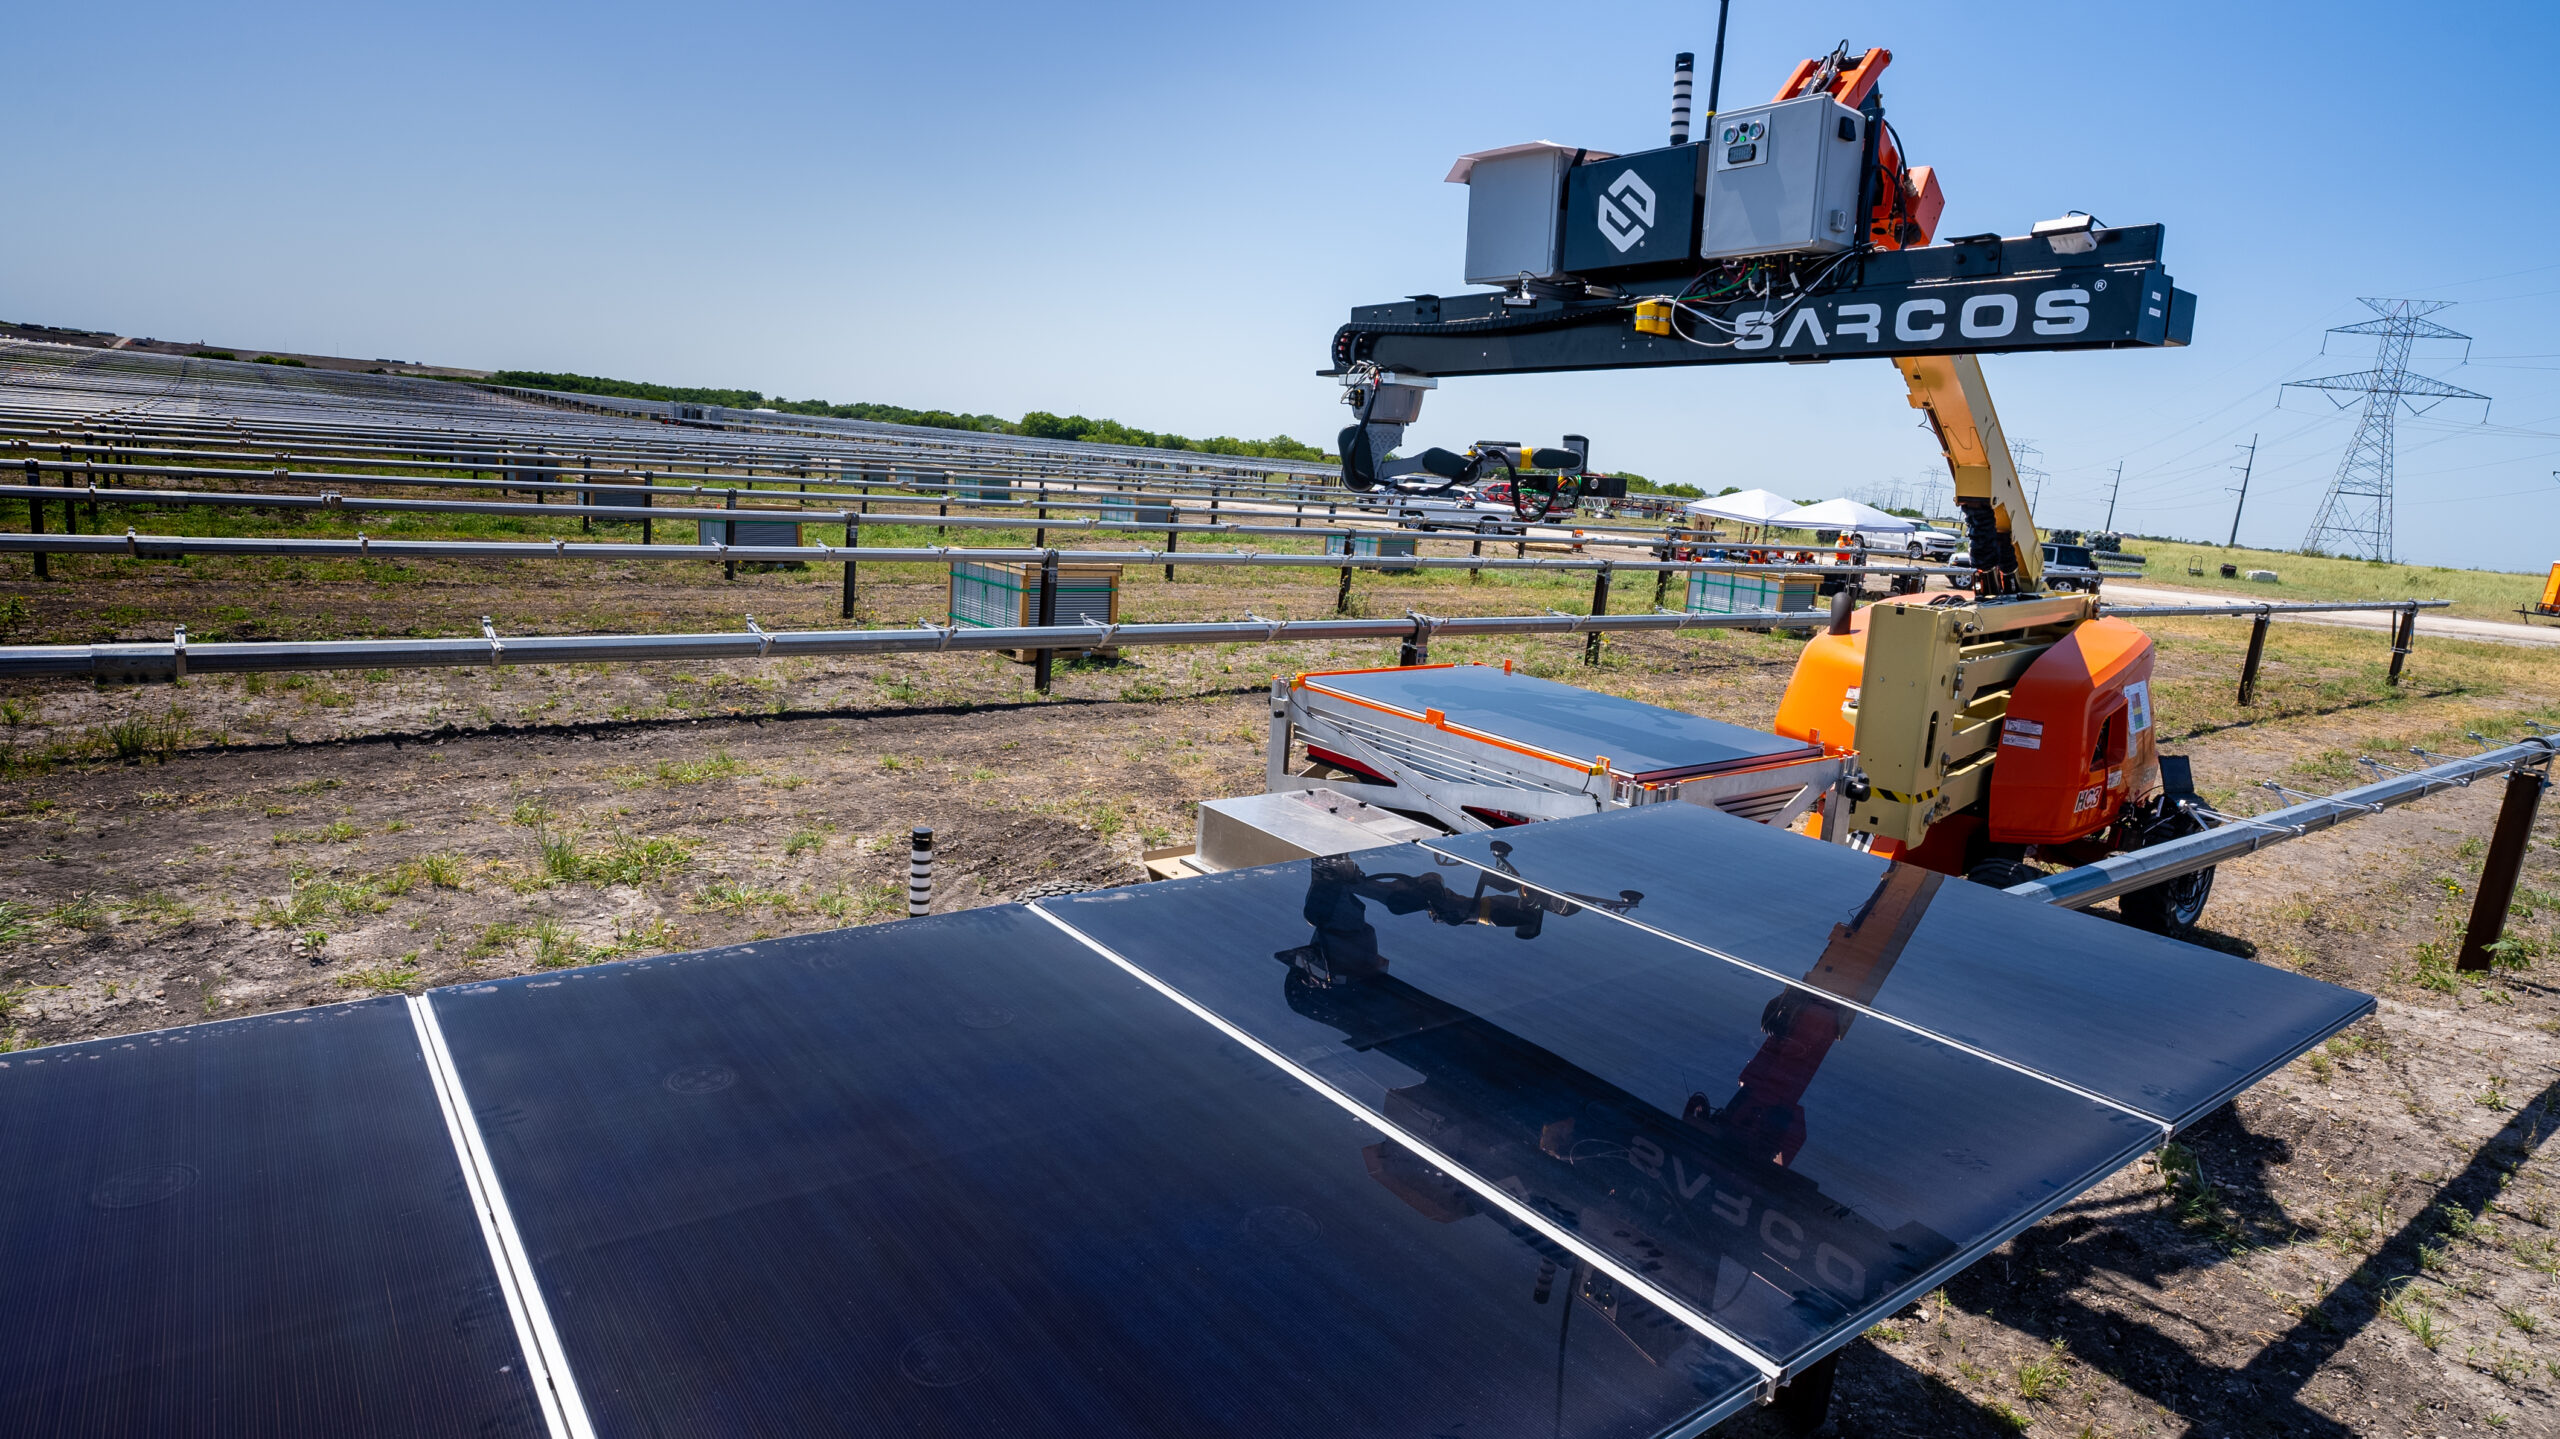 Sarcos, Blattner Team to Develop Robotic Solar Construction System